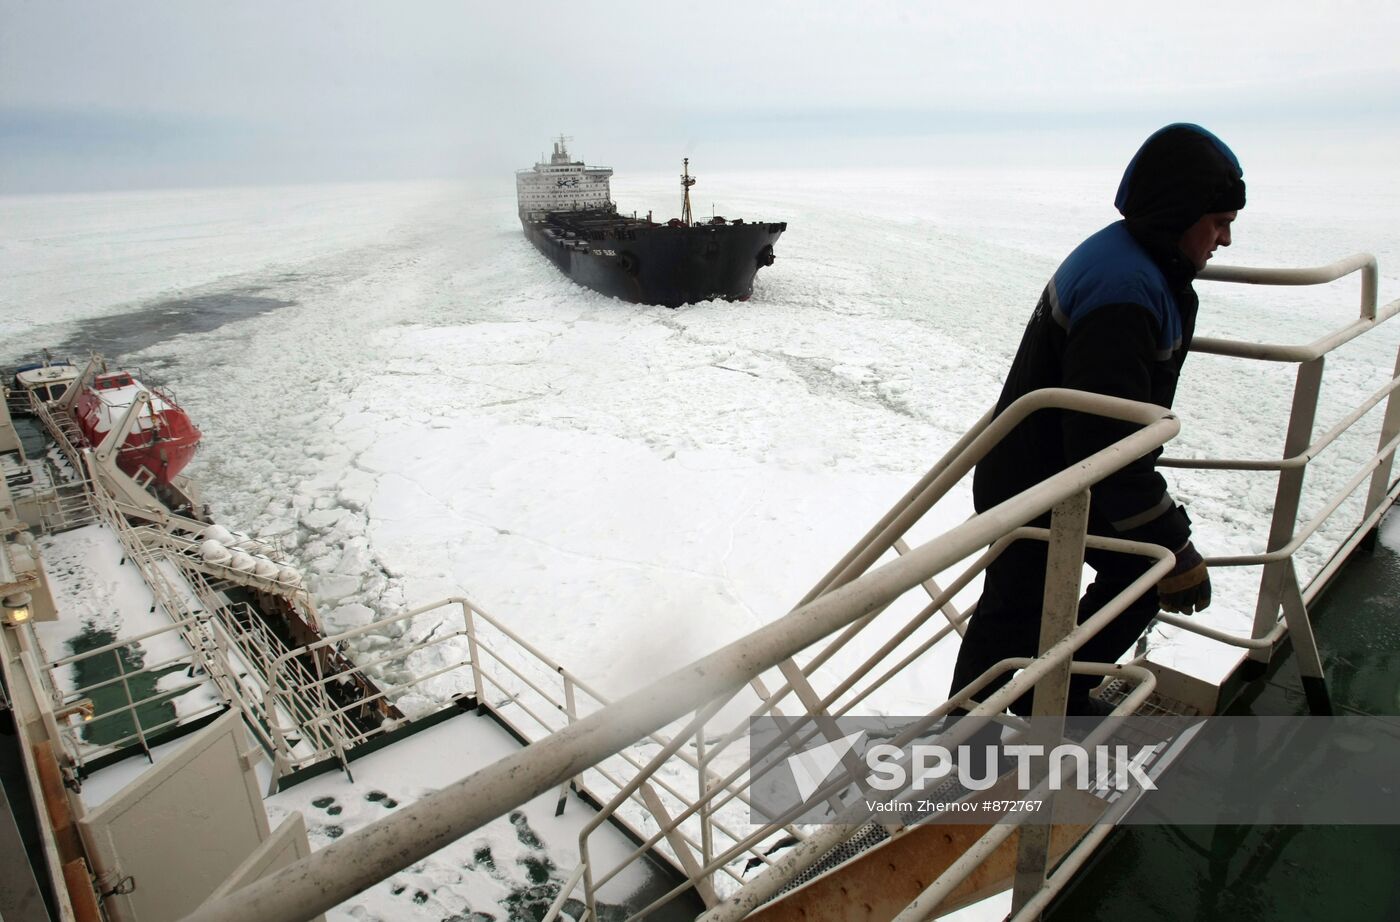 Vaigach nuclear icebreaker leading ships through Gulf of Finland